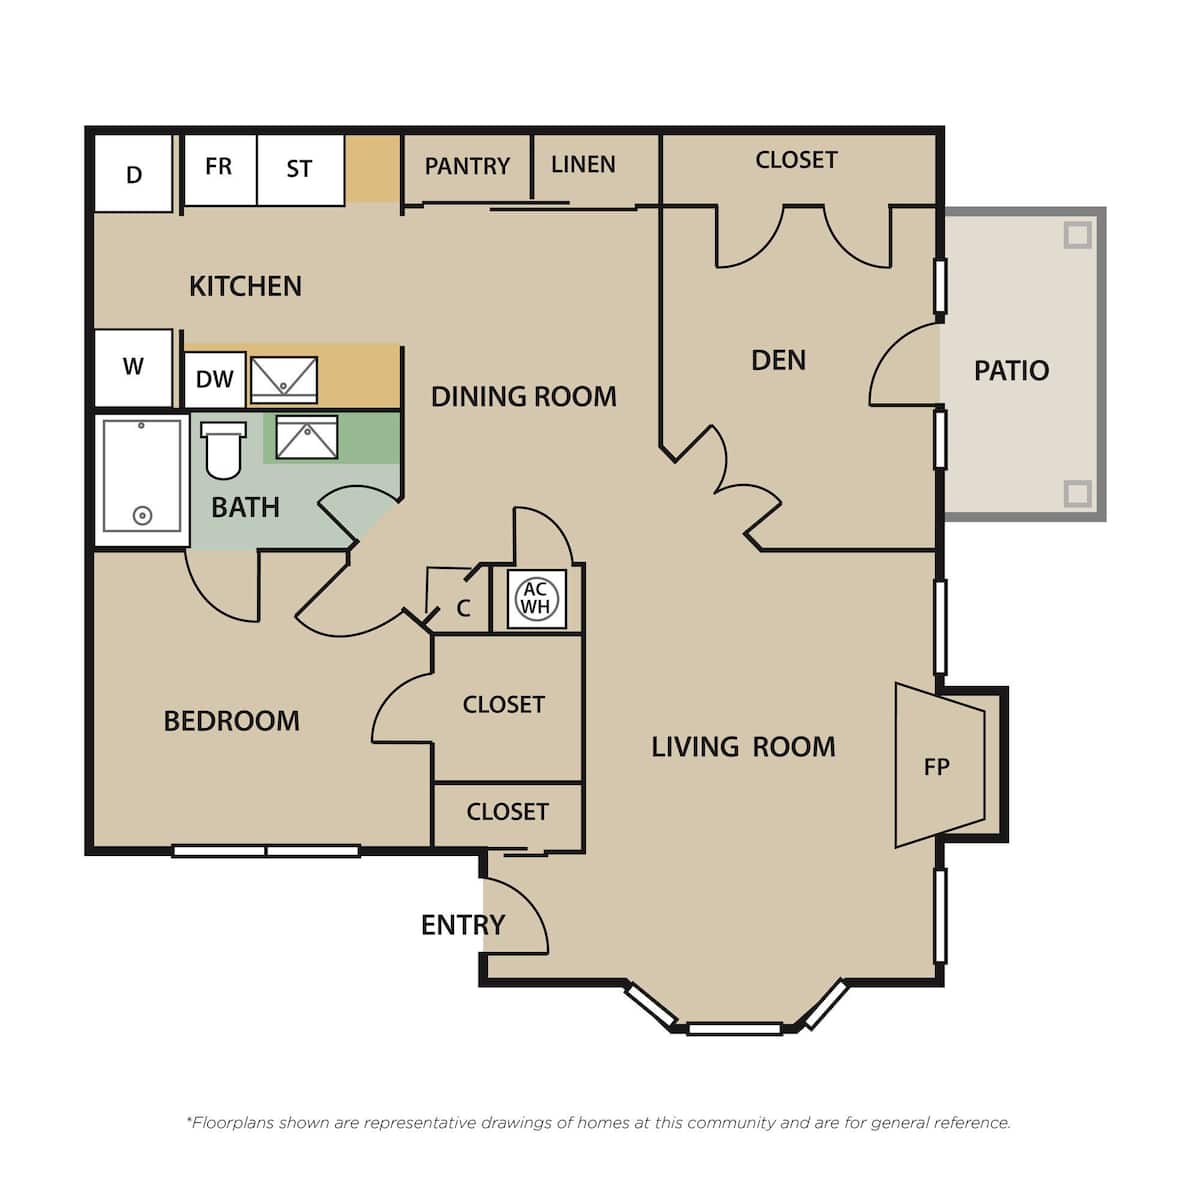 Floorplan diagram for GROVE A9, showing 1 bedroom